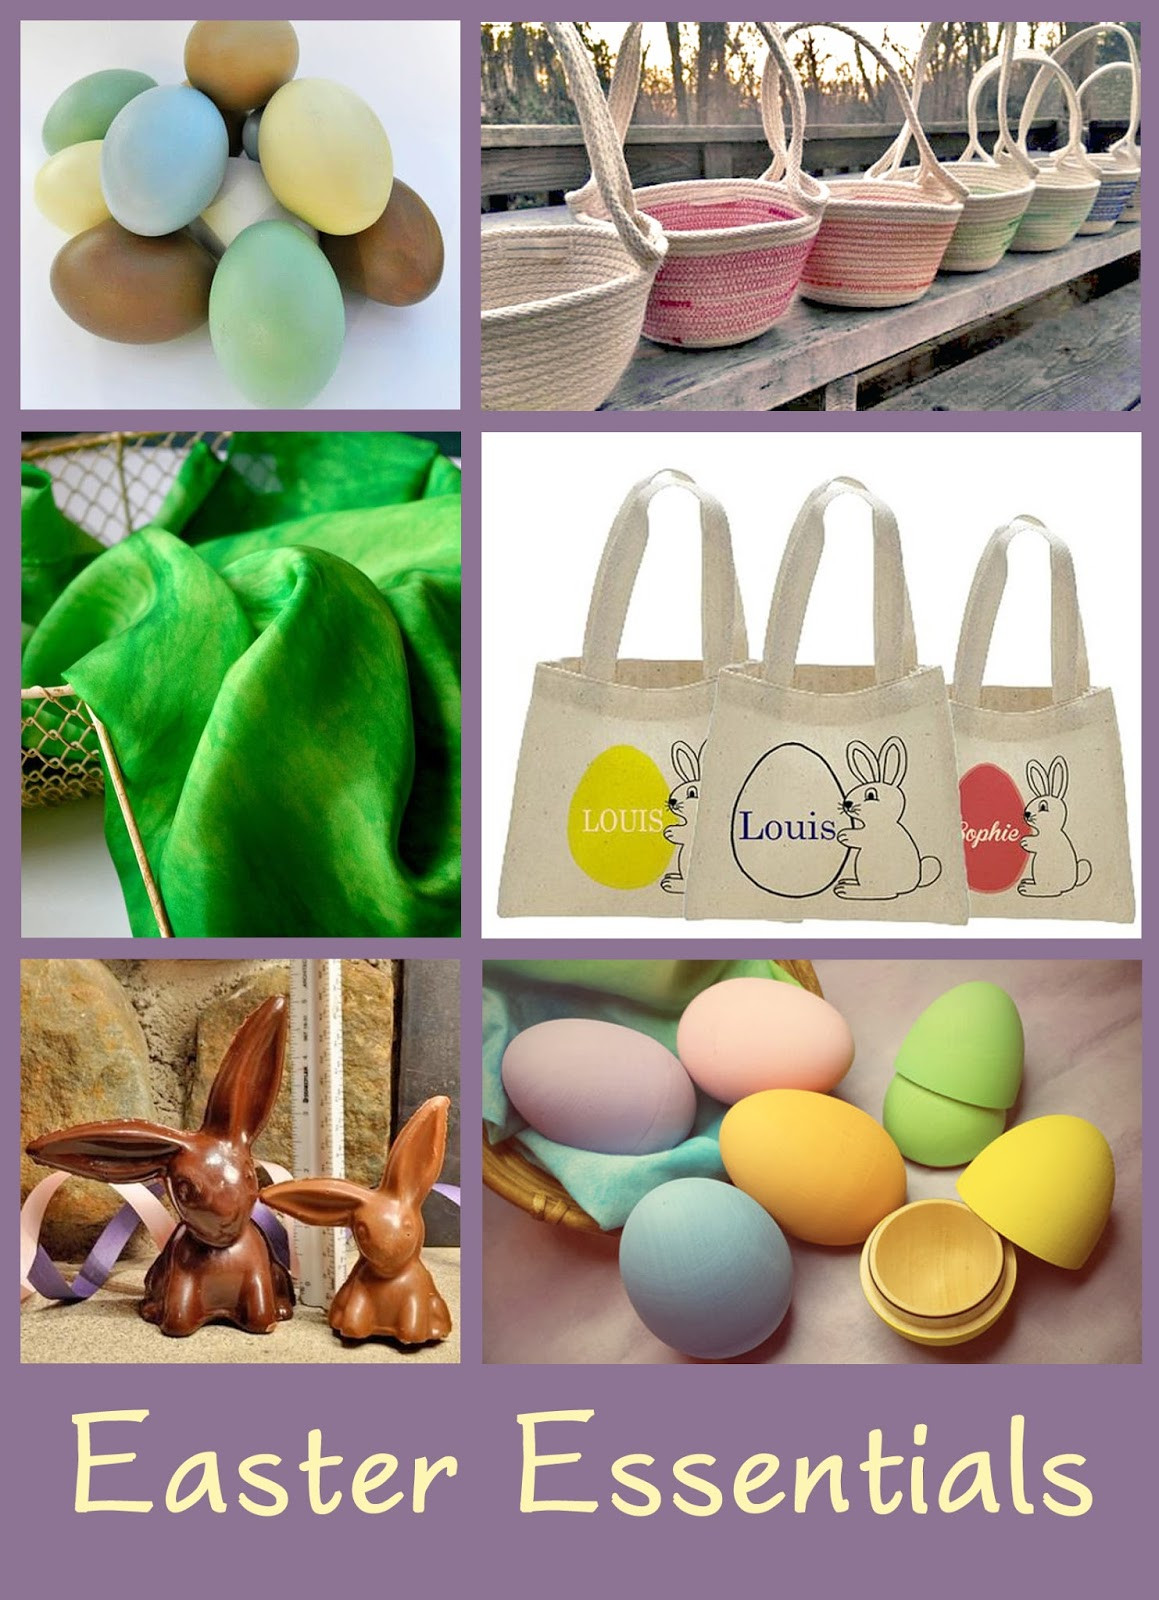 Easter Basket Hiding Ideas
 The Mindful Home Handmade Easter Basket Gift Ideas